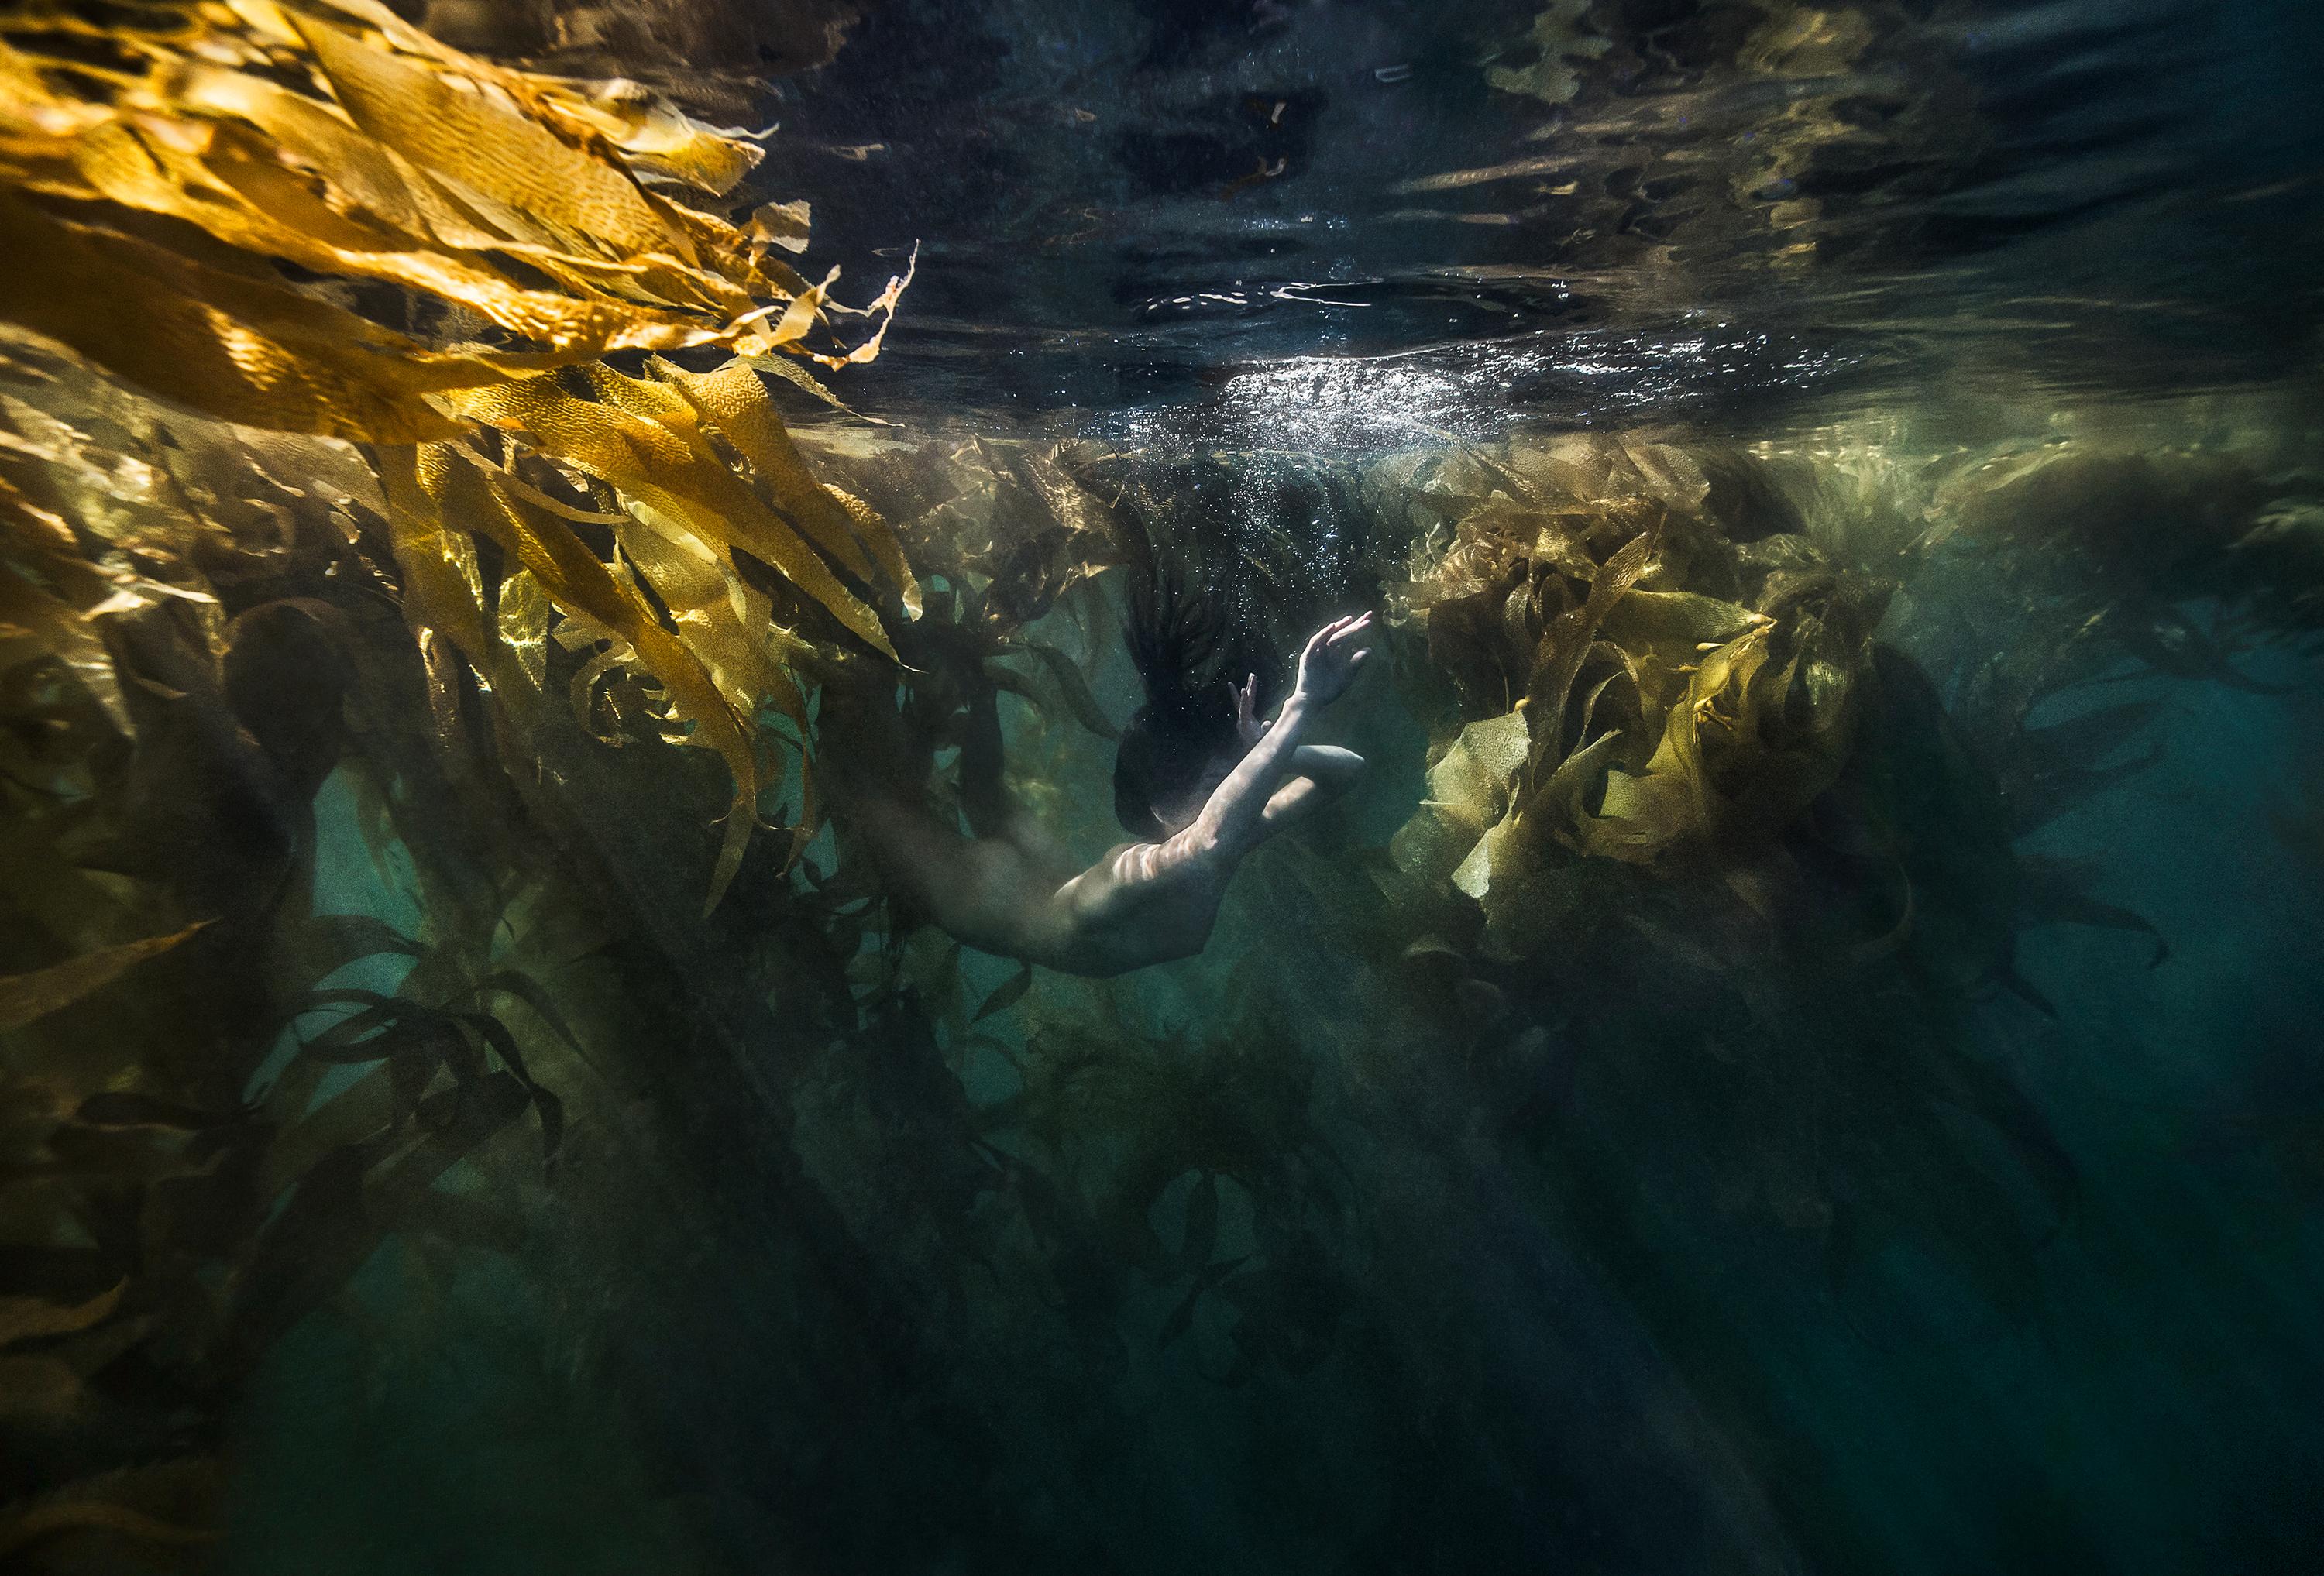 Alex Sher Color Photograph - Jungle Mermaid - underwater ocean nude photograph - archival pigment 35" x 52"